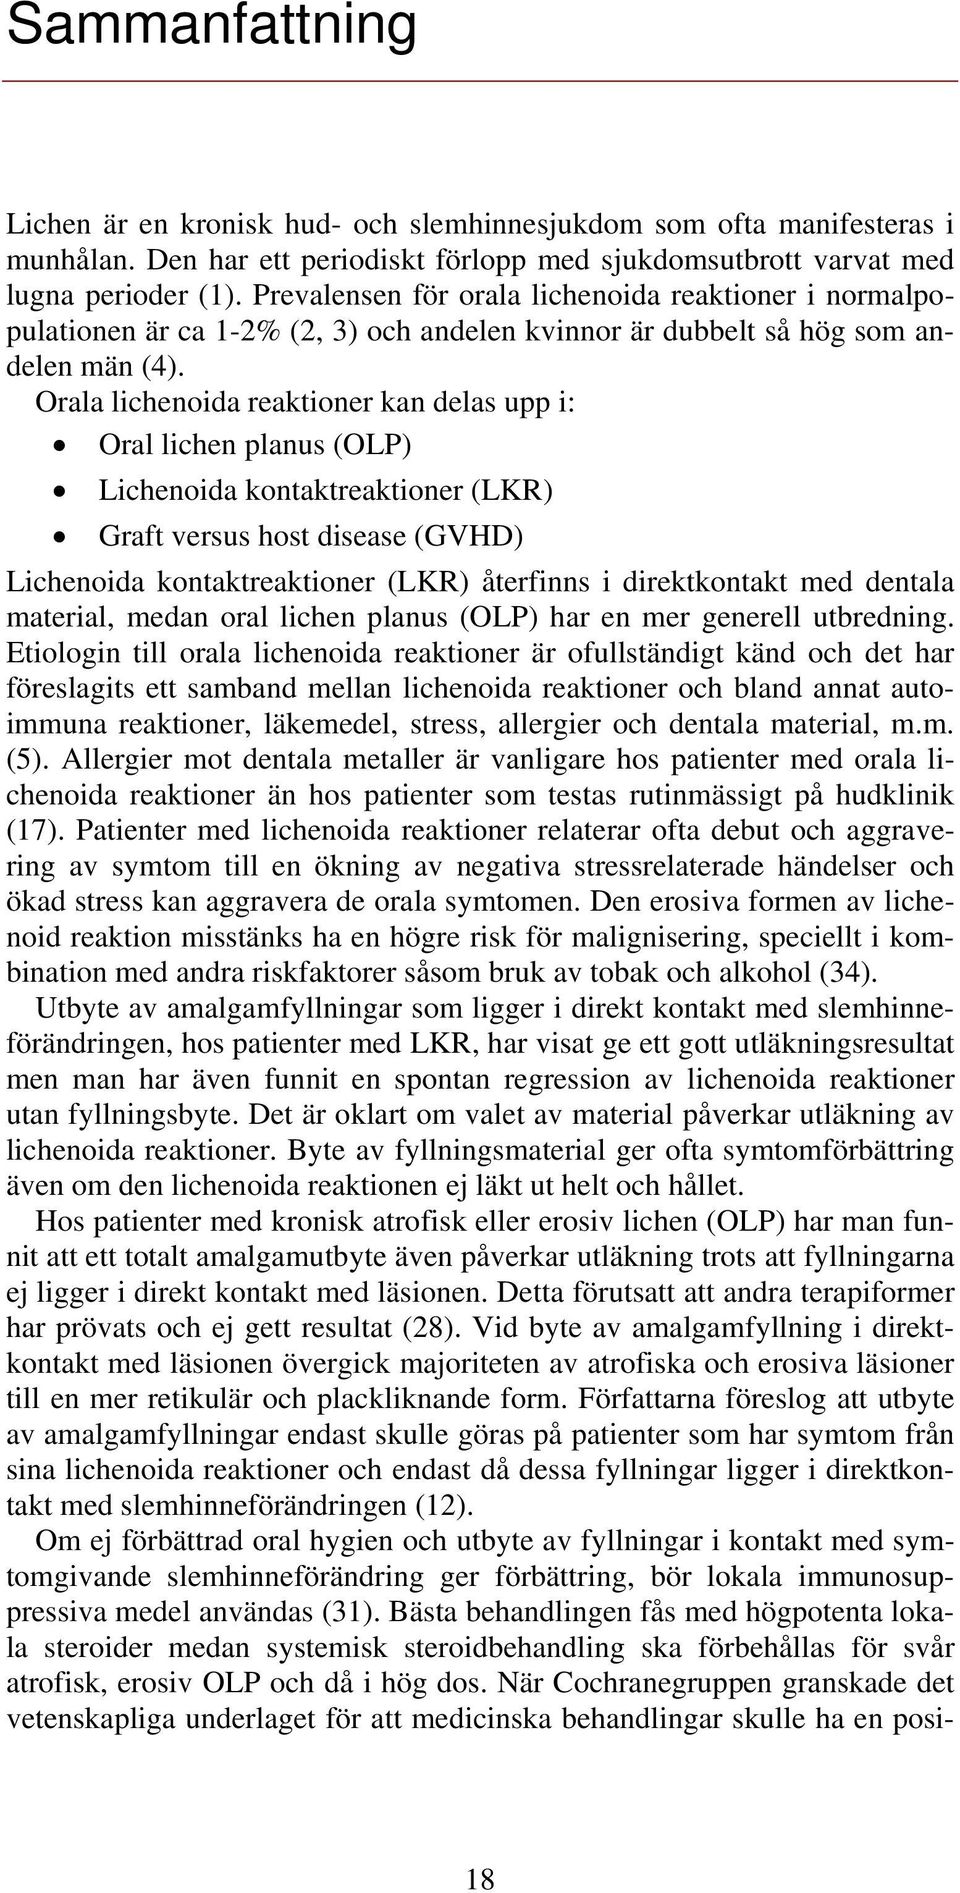 Orala lichenoida reaktioner kan delas upp i: Oral lichen planus (OLP) Lichenoida kontaktreaktioner (LKR) Graft versus host disease (GVHD) Lichenoida kontaktreaktioner (LKR) återfinns i direktkontakt